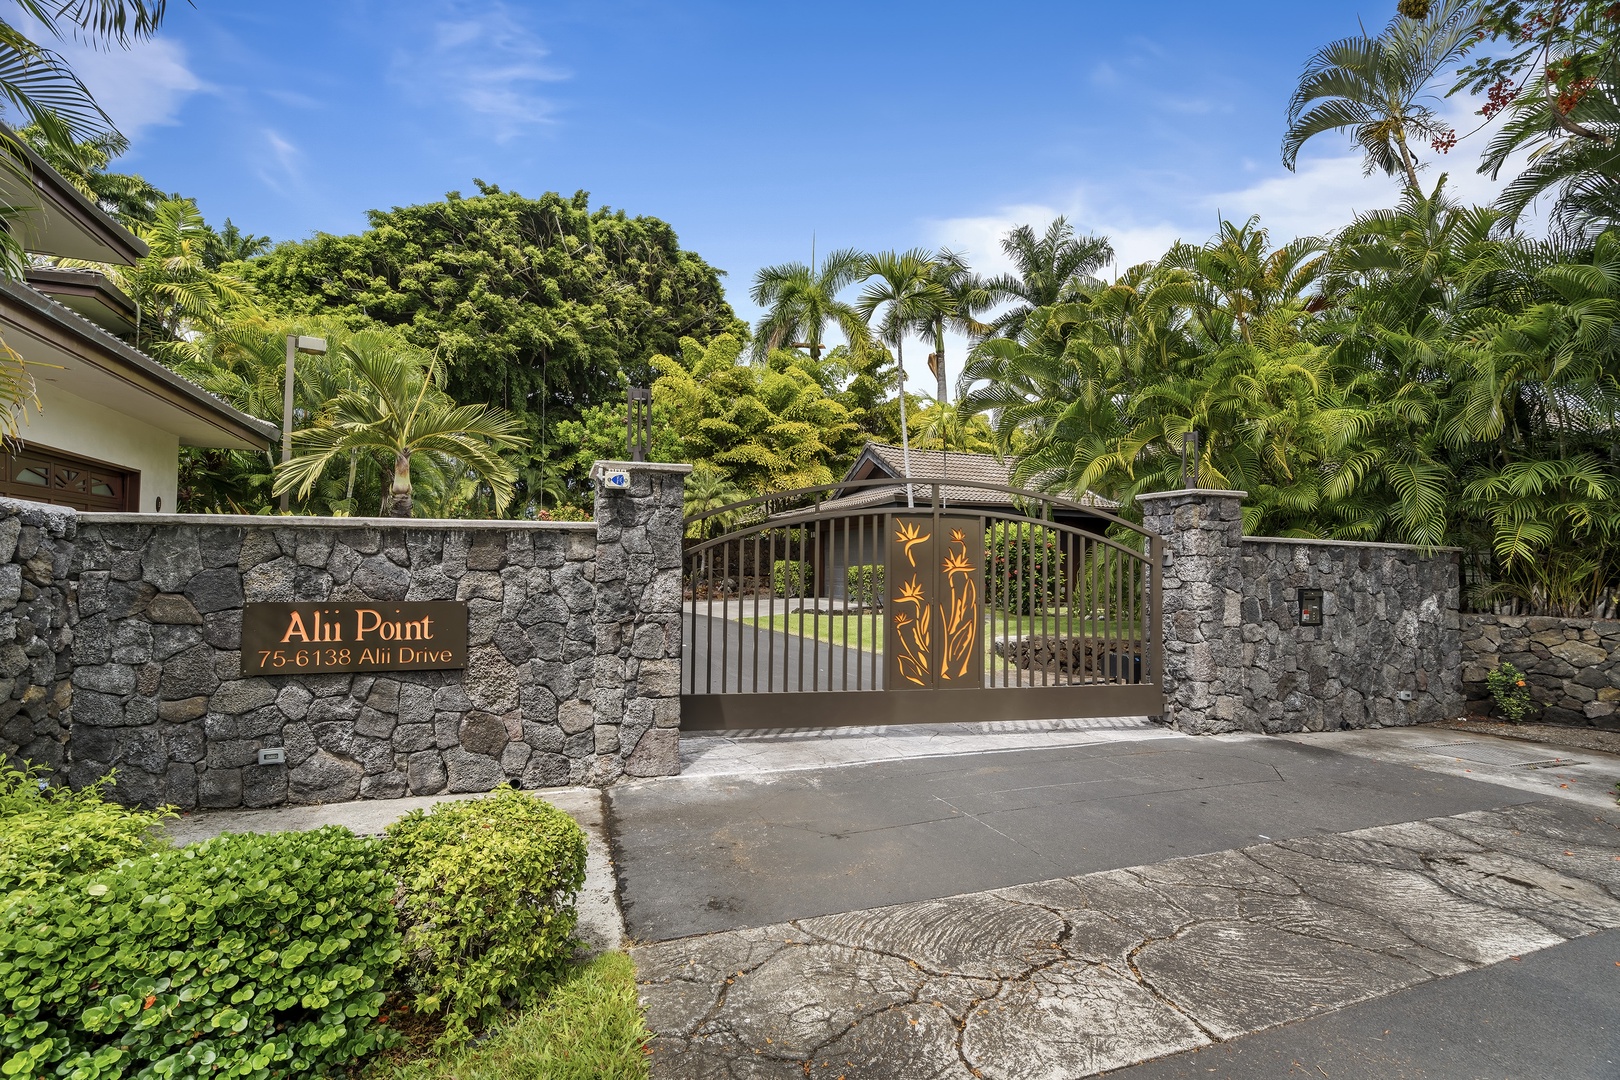 Kailua Kona Vacation Rentals, Ali'i Point #7 - Alii Point Gate